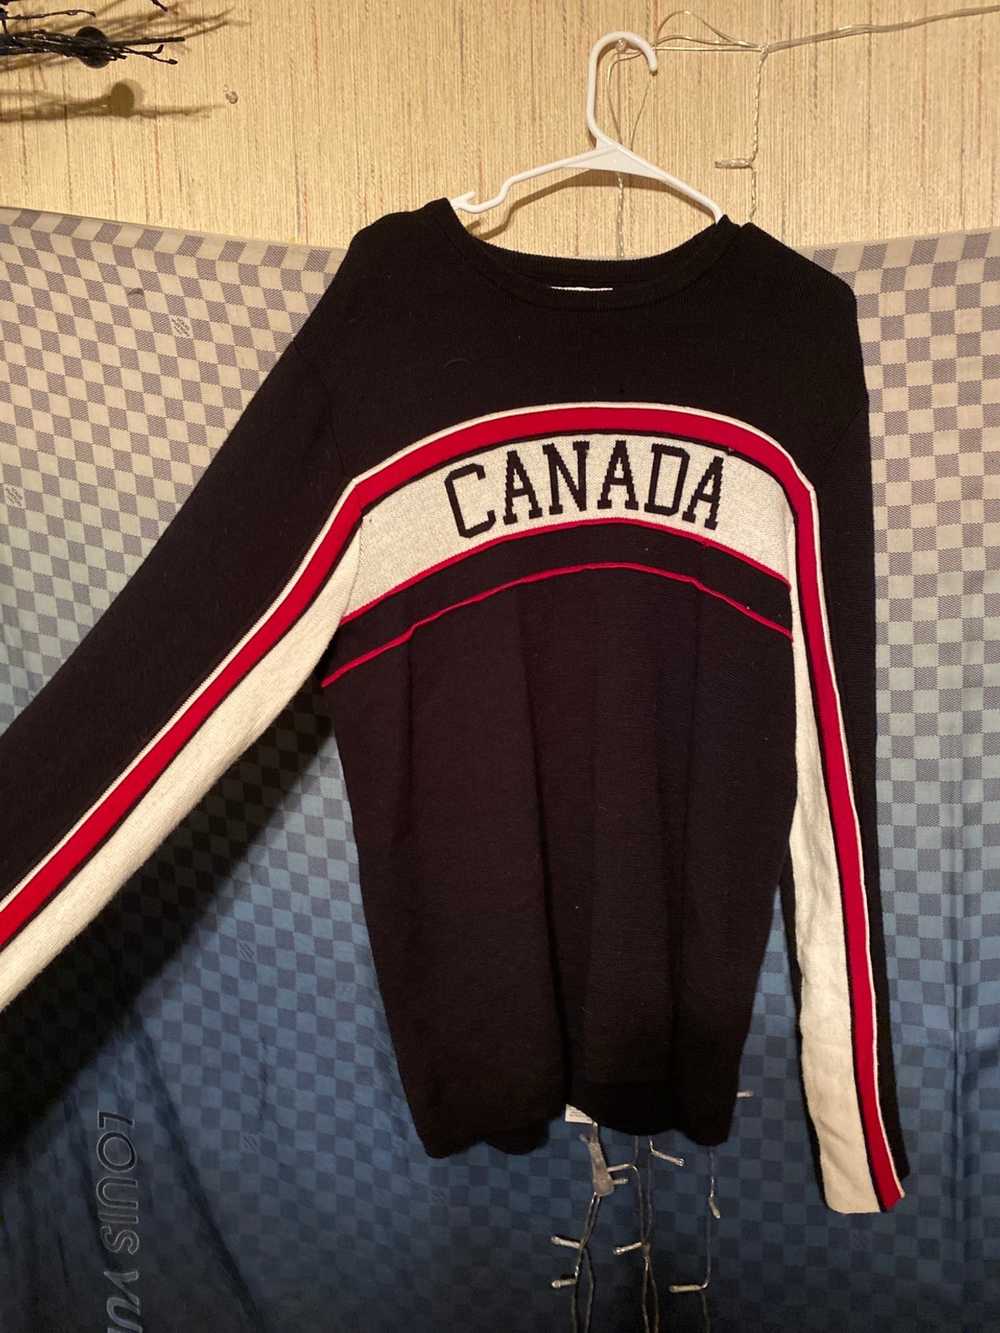 Vuitton Sweater -  Canada